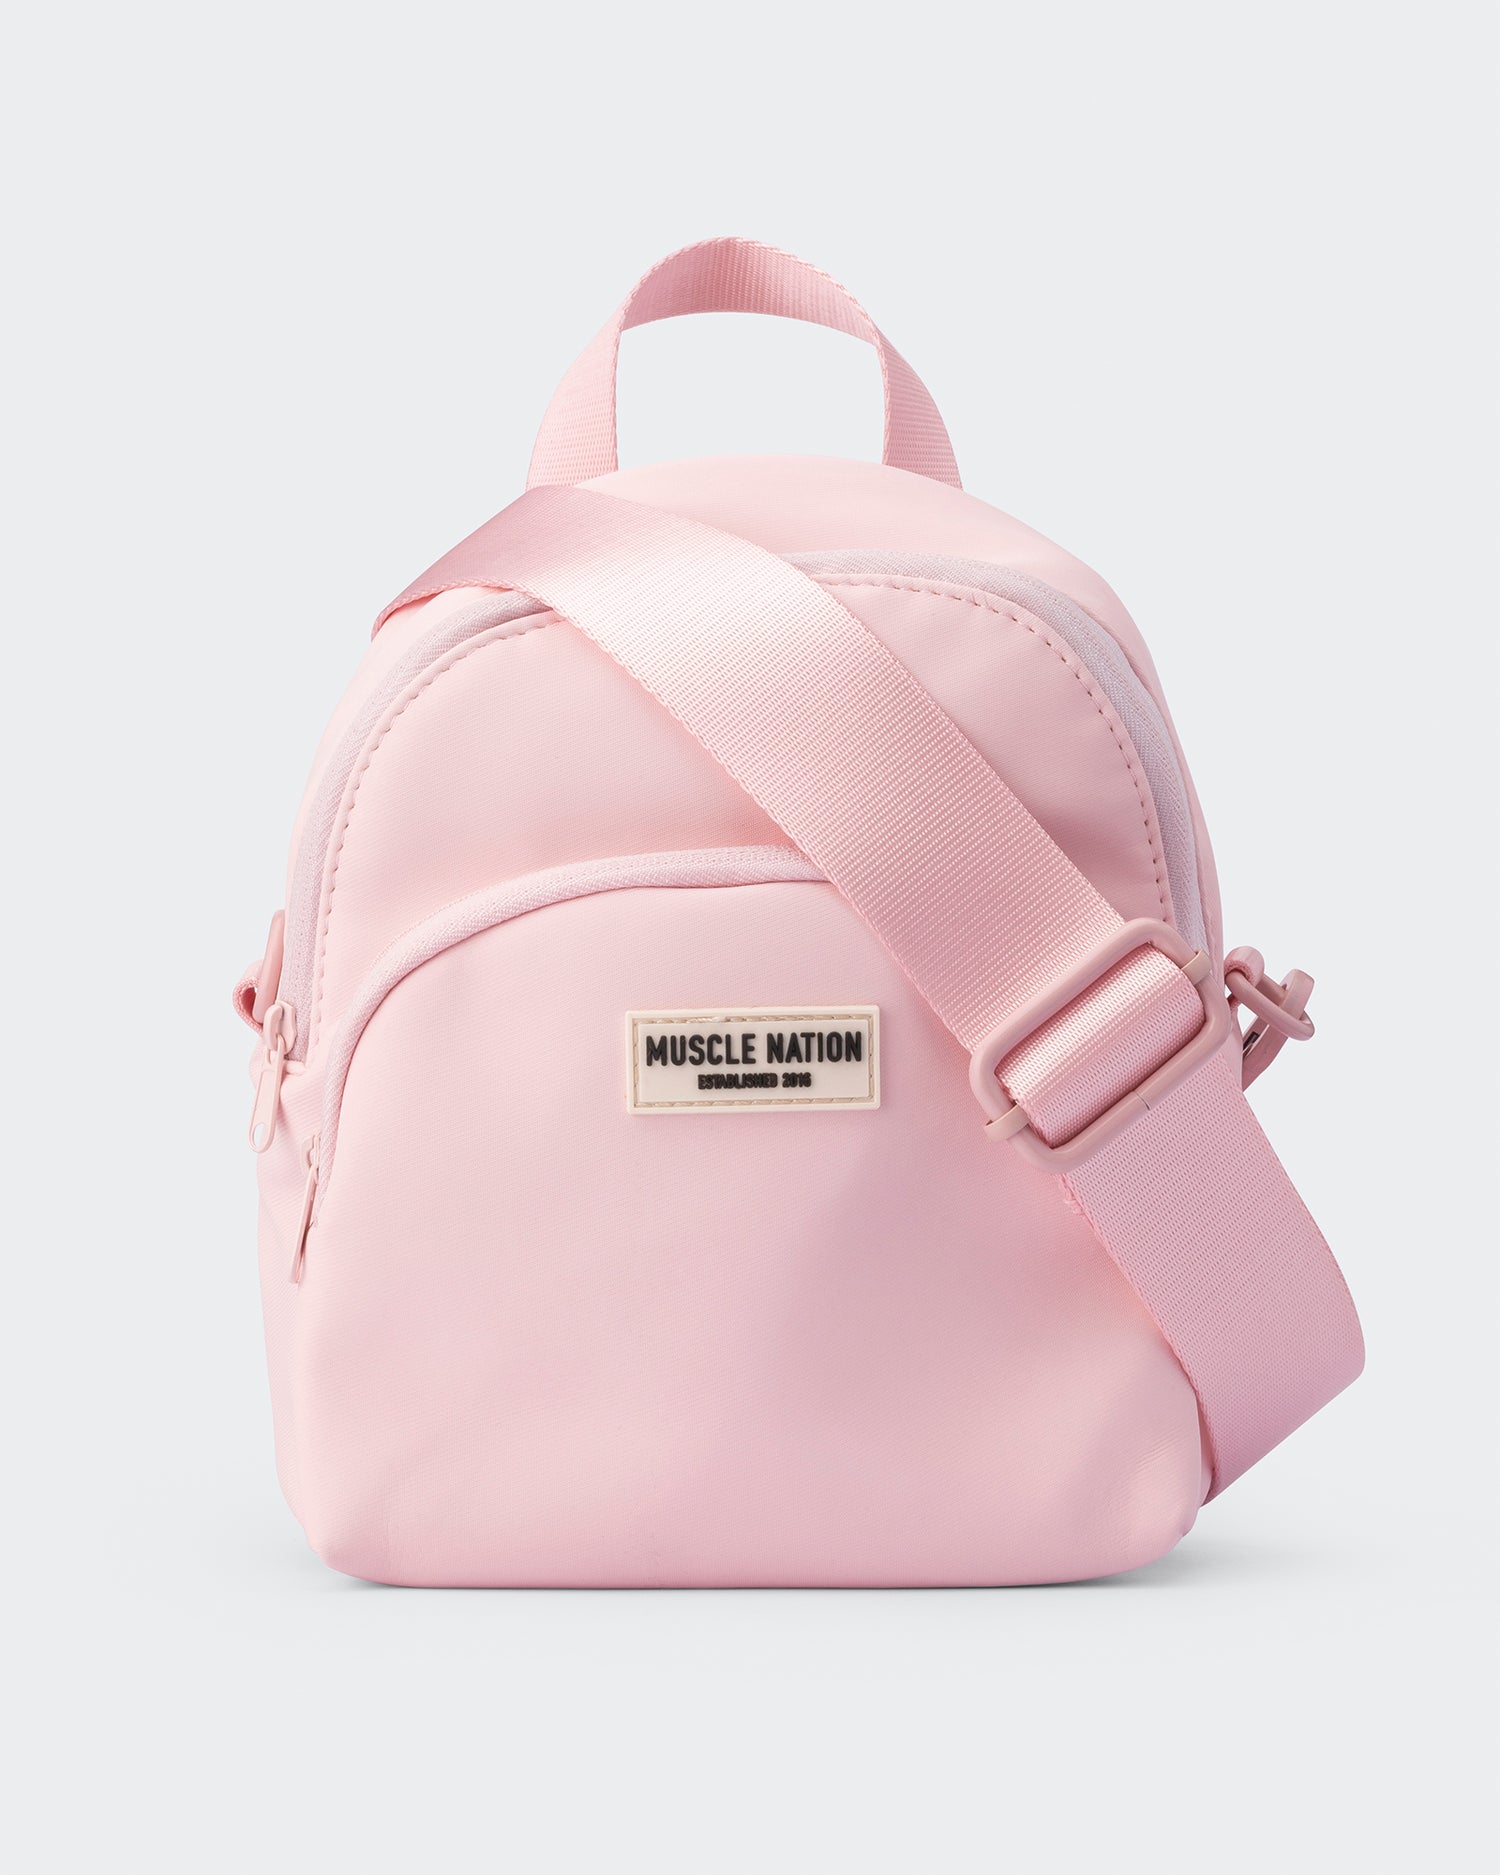 Mini Side Bag - Pale Pink